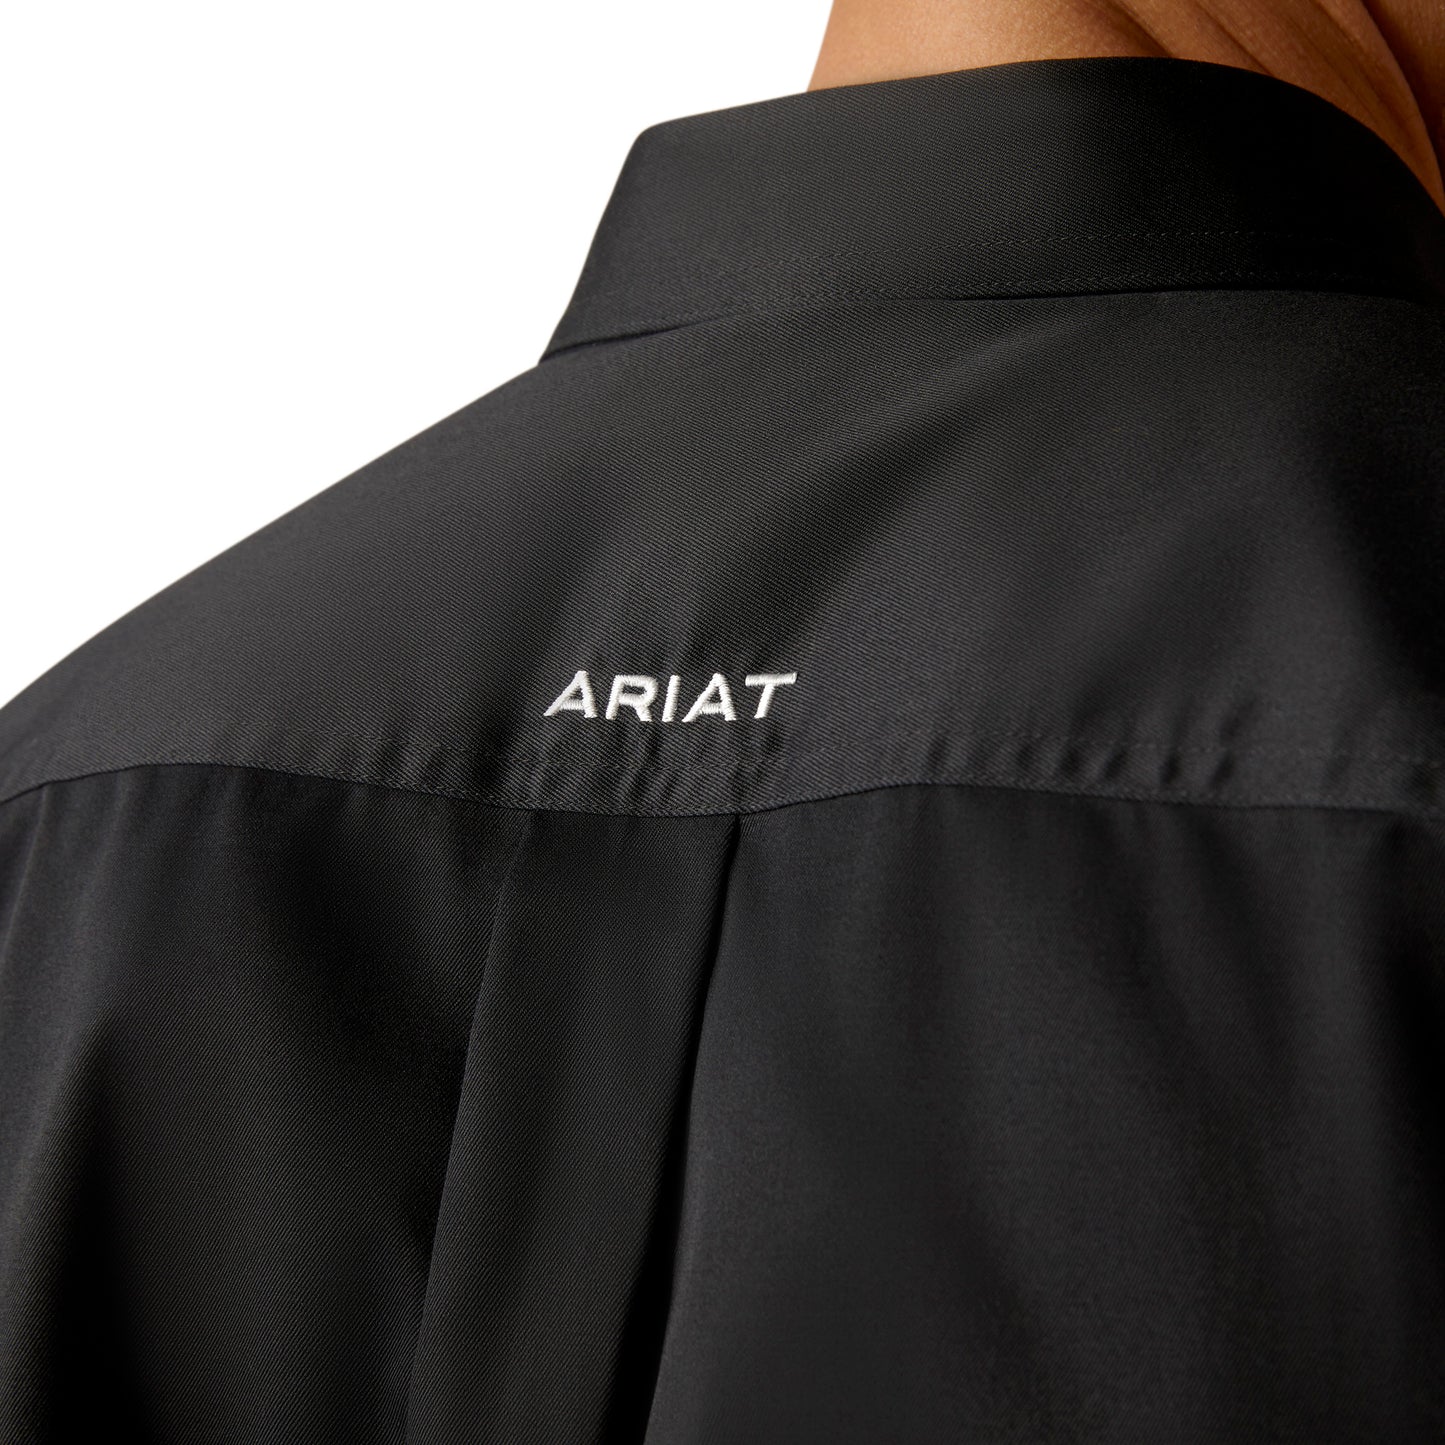 Ariat Mexico Team Logo Twill Classic Fit Shirt - Black